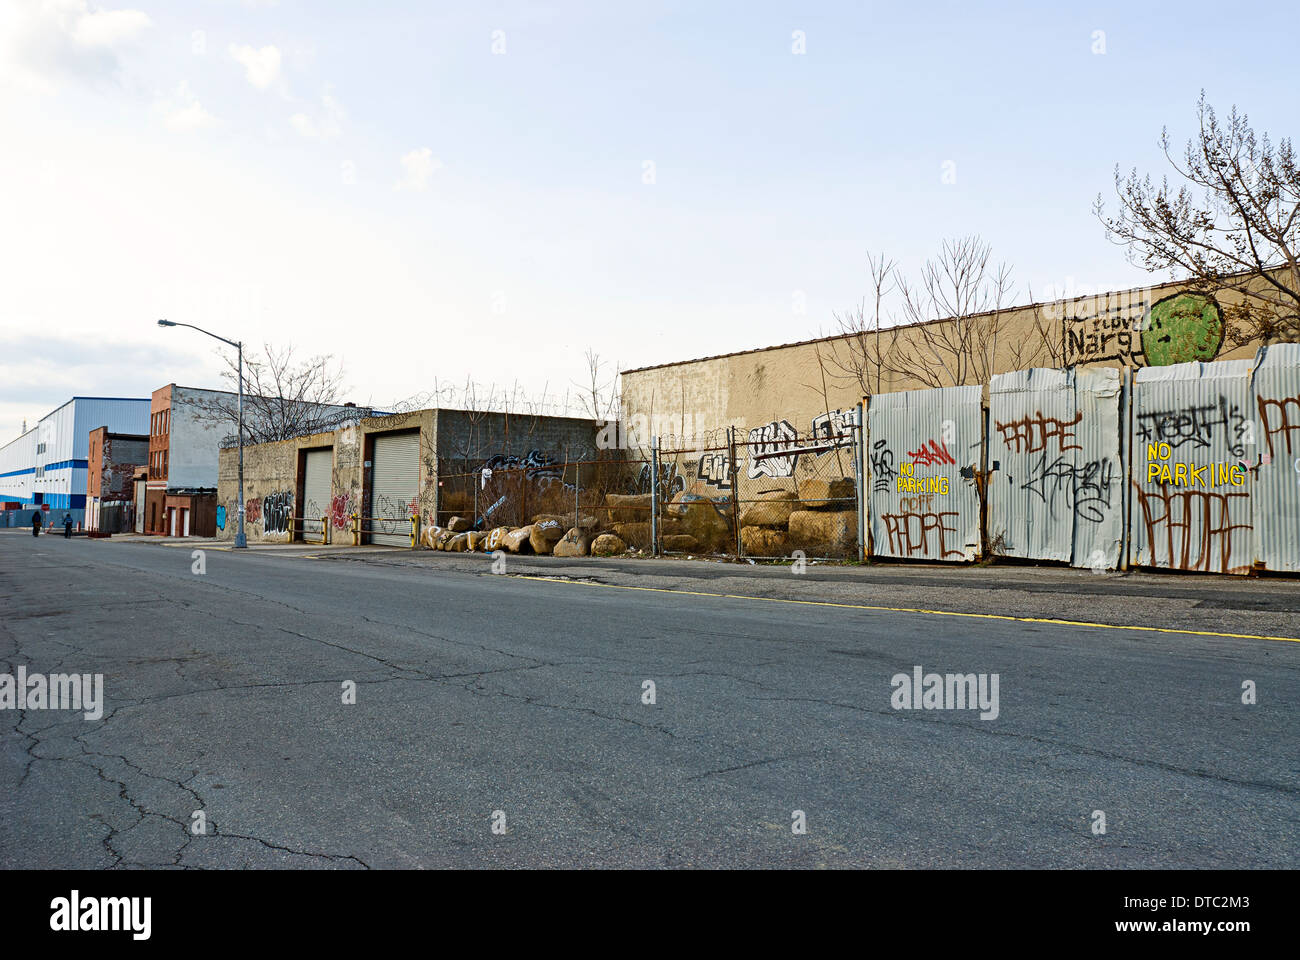 Deserted dangerous empty urban street scene with old warehouse buildings. Stock Photo